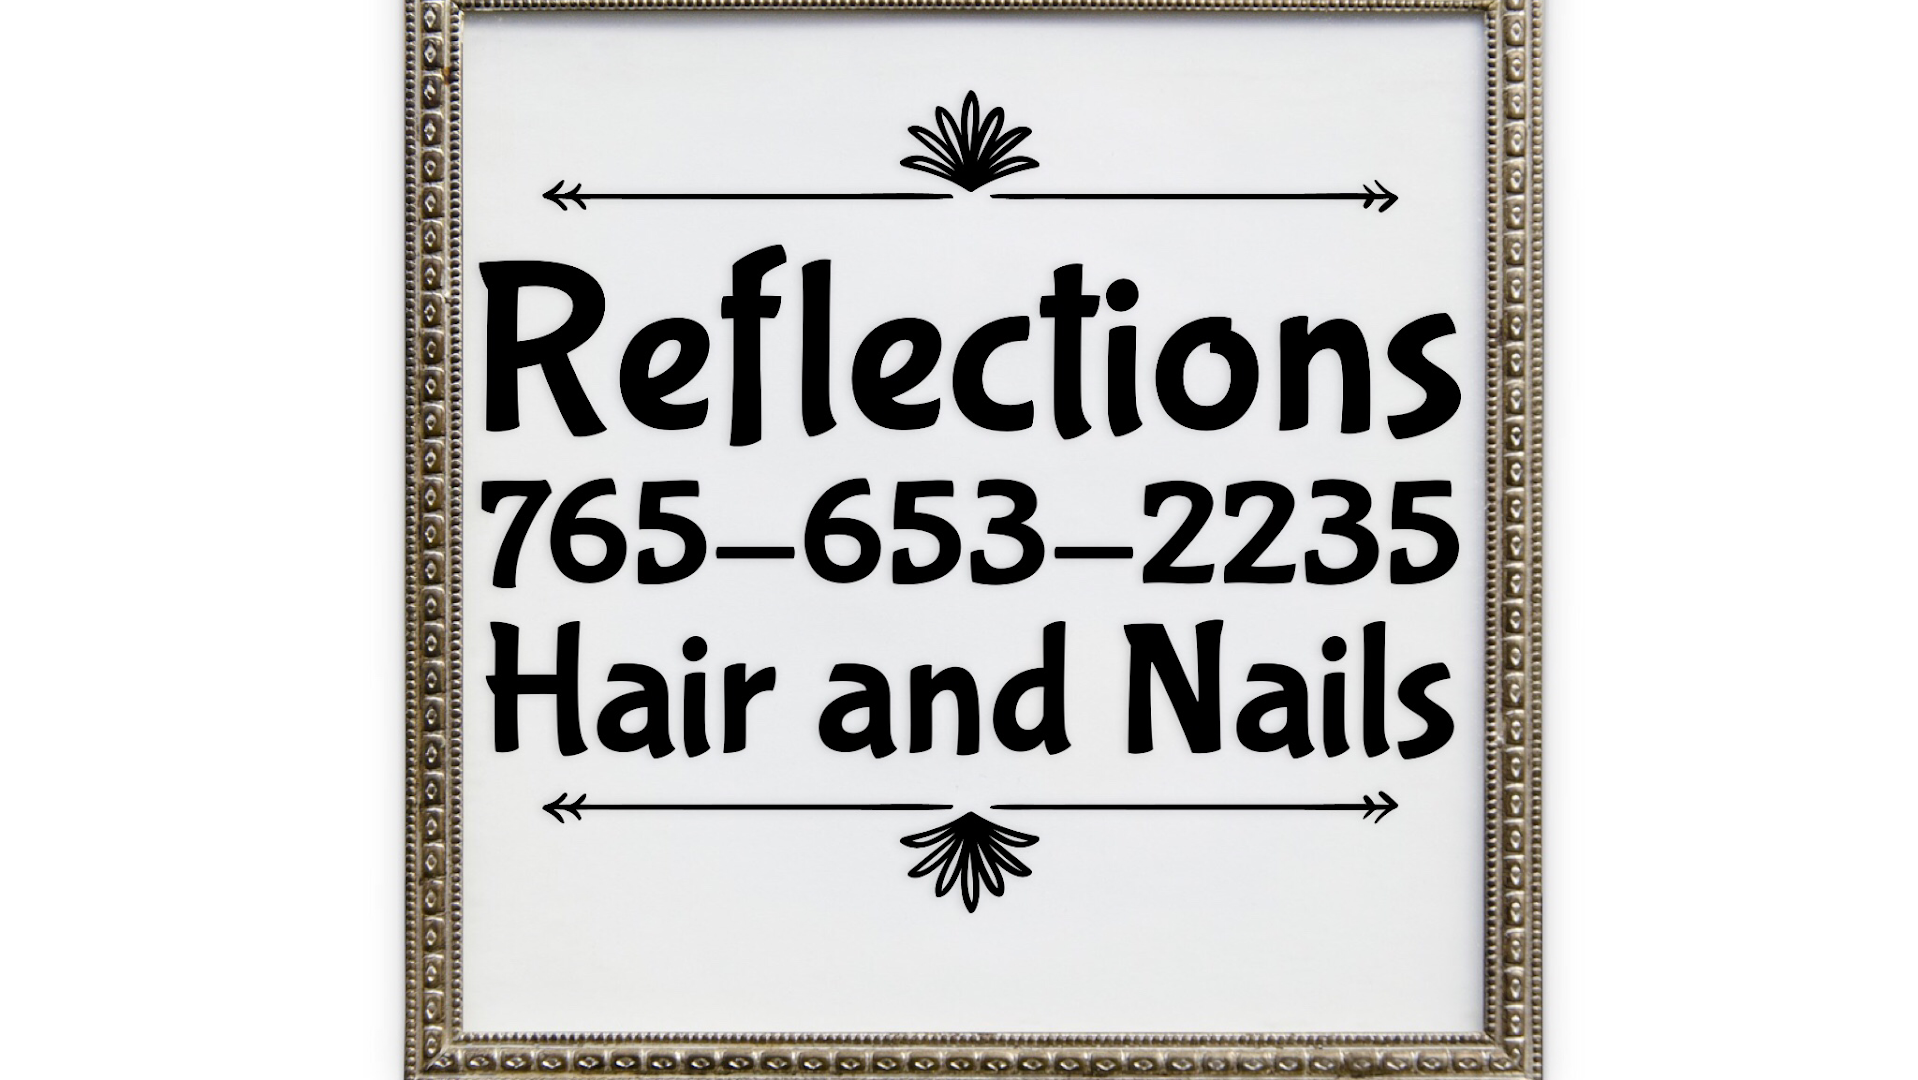 Reflections Hair and Nails